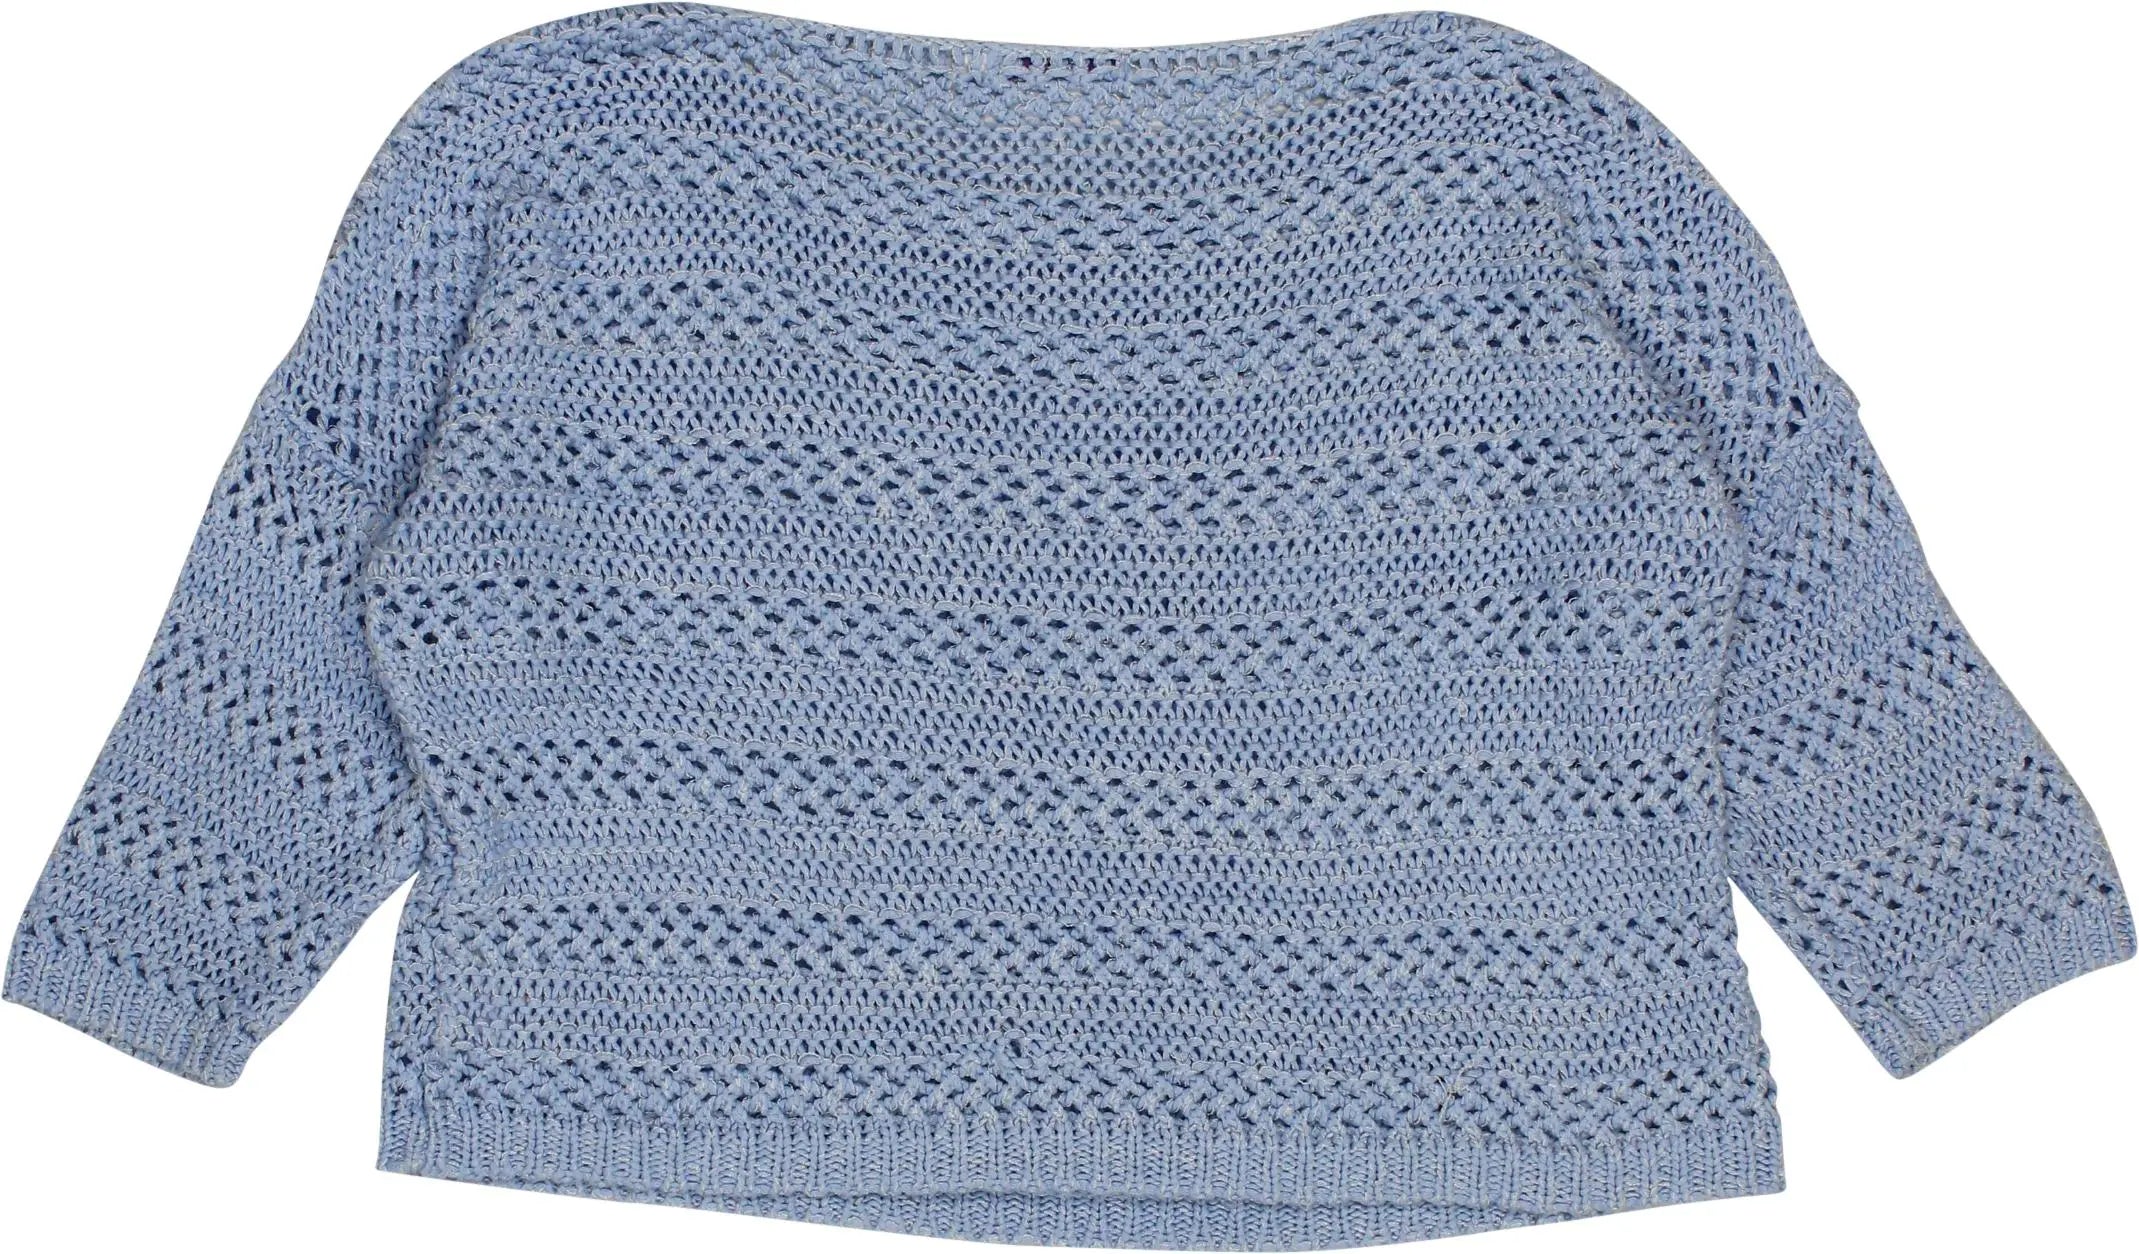 Miss Etam - Blue Crochet Top- ThriftTale.com - Vintage and second handclothing